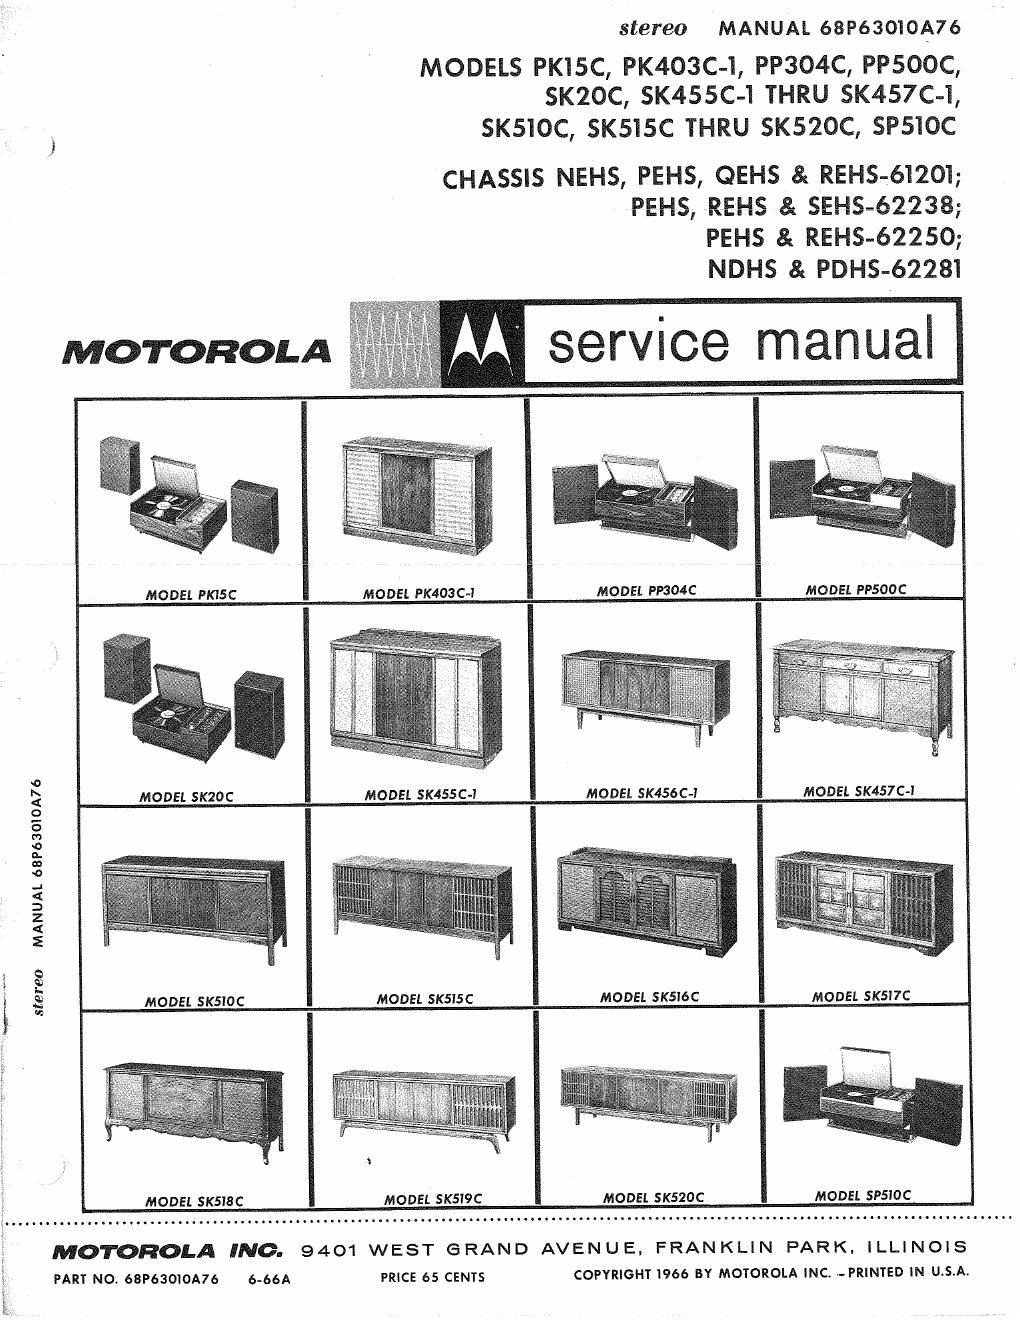 motorola pk 403 c 1 service manual